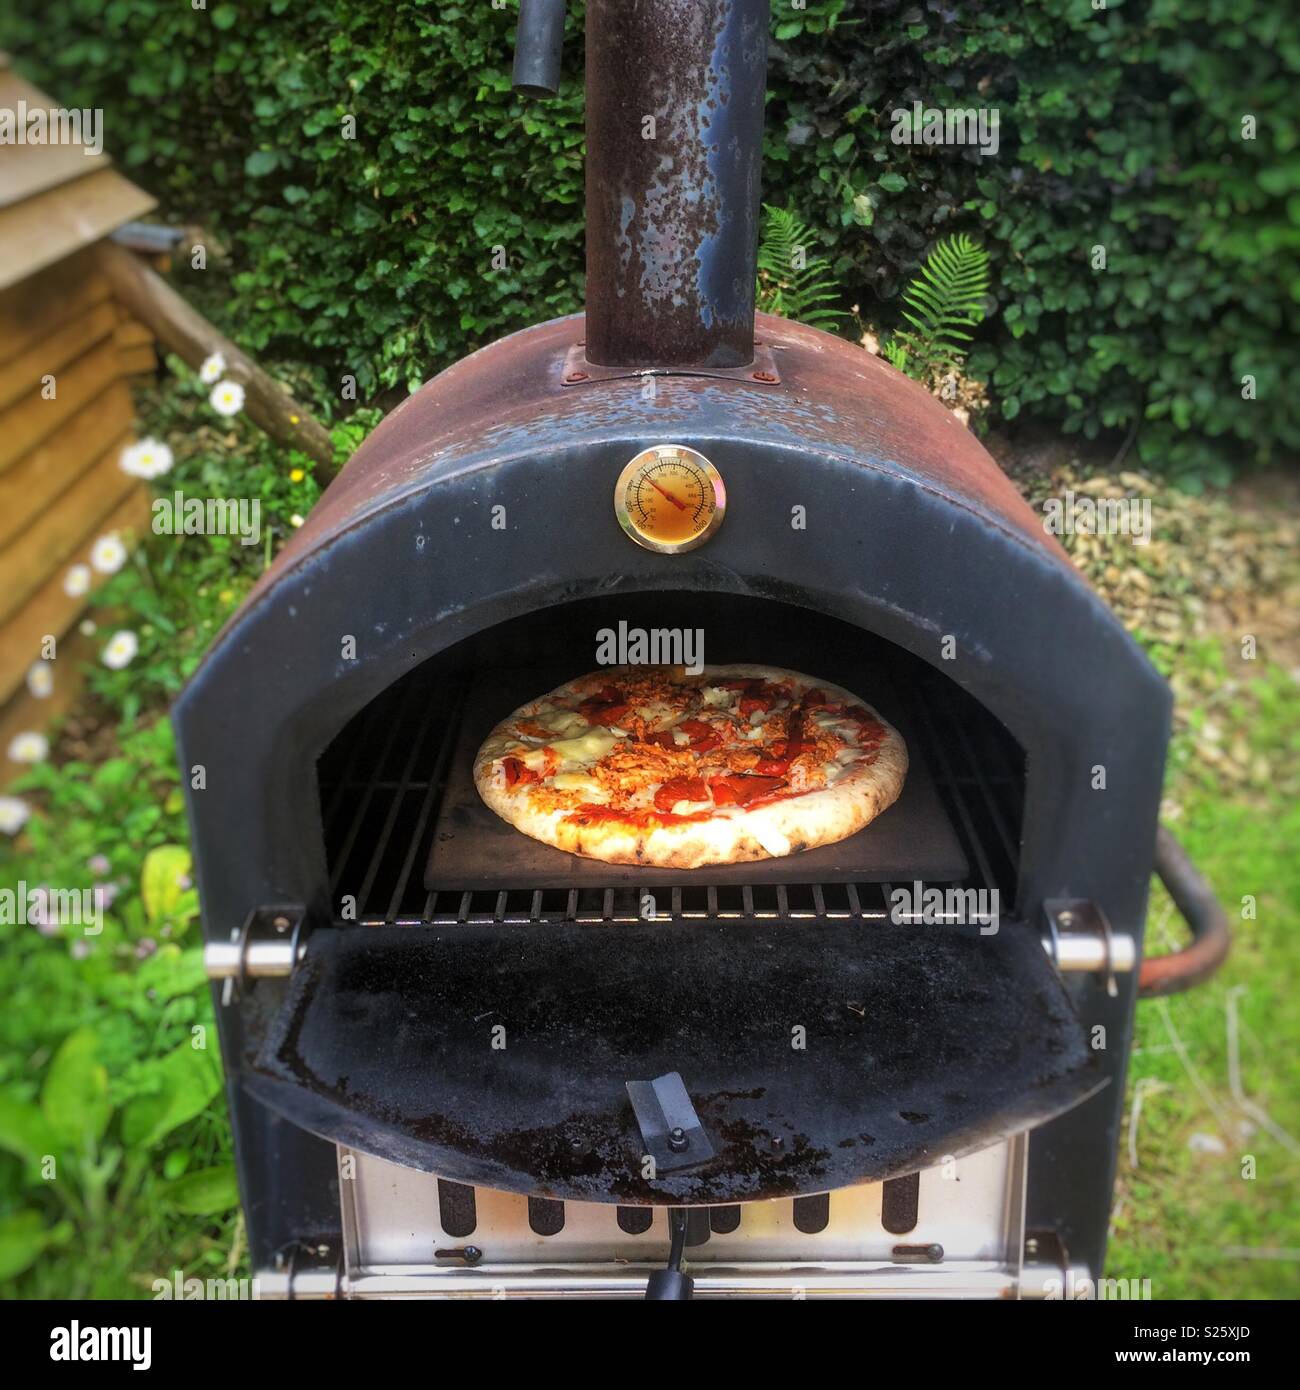 Pizza oven outside fotografías imágenes de alta resolución - Alamy